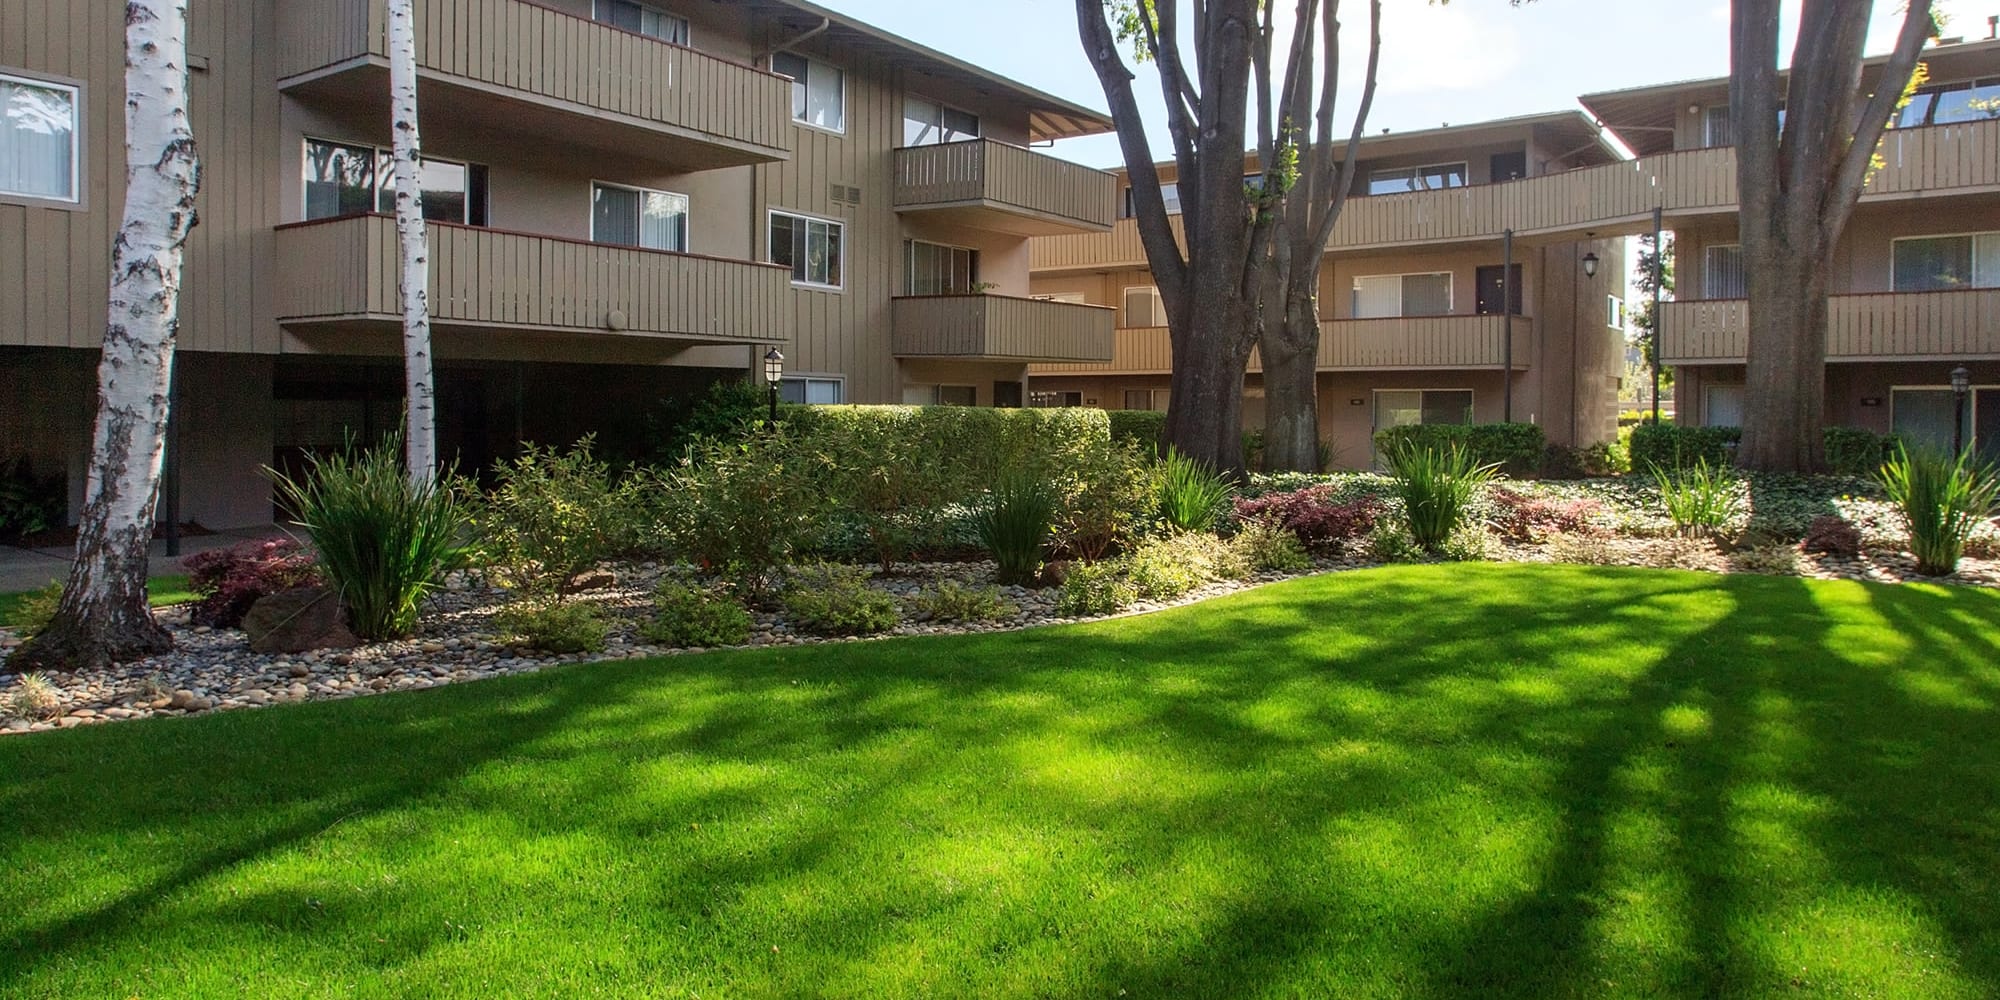 Exterior of Stanford Villa Apartment Homes in Palo Alto, California